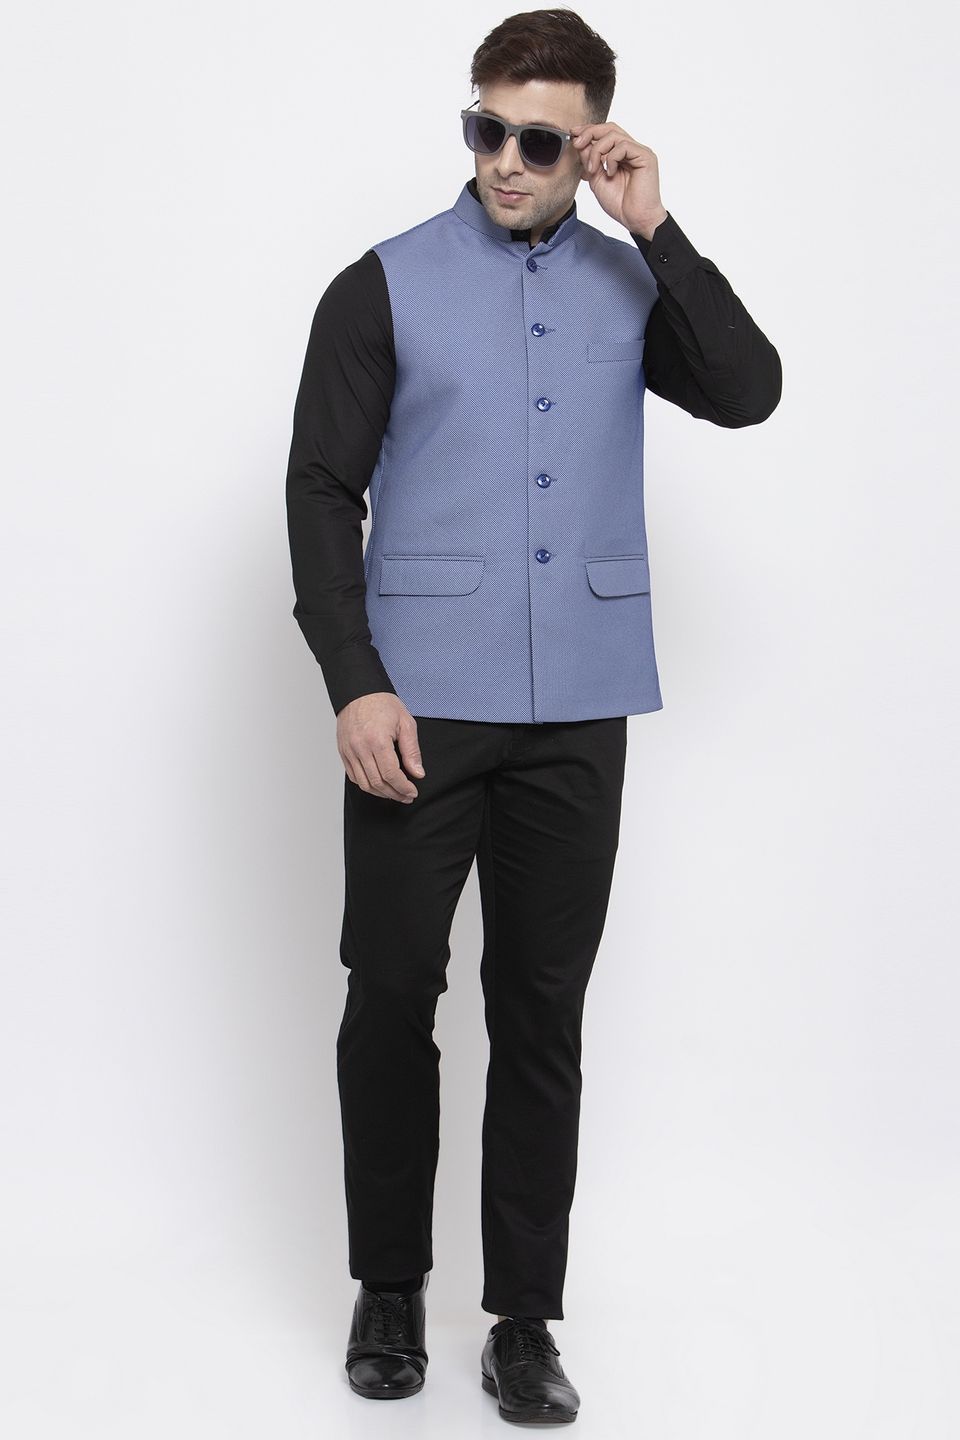 WINTAGE Men's Poly Cotton Festive and Casual Nehru Jacket Vest Waistcoat : Blue